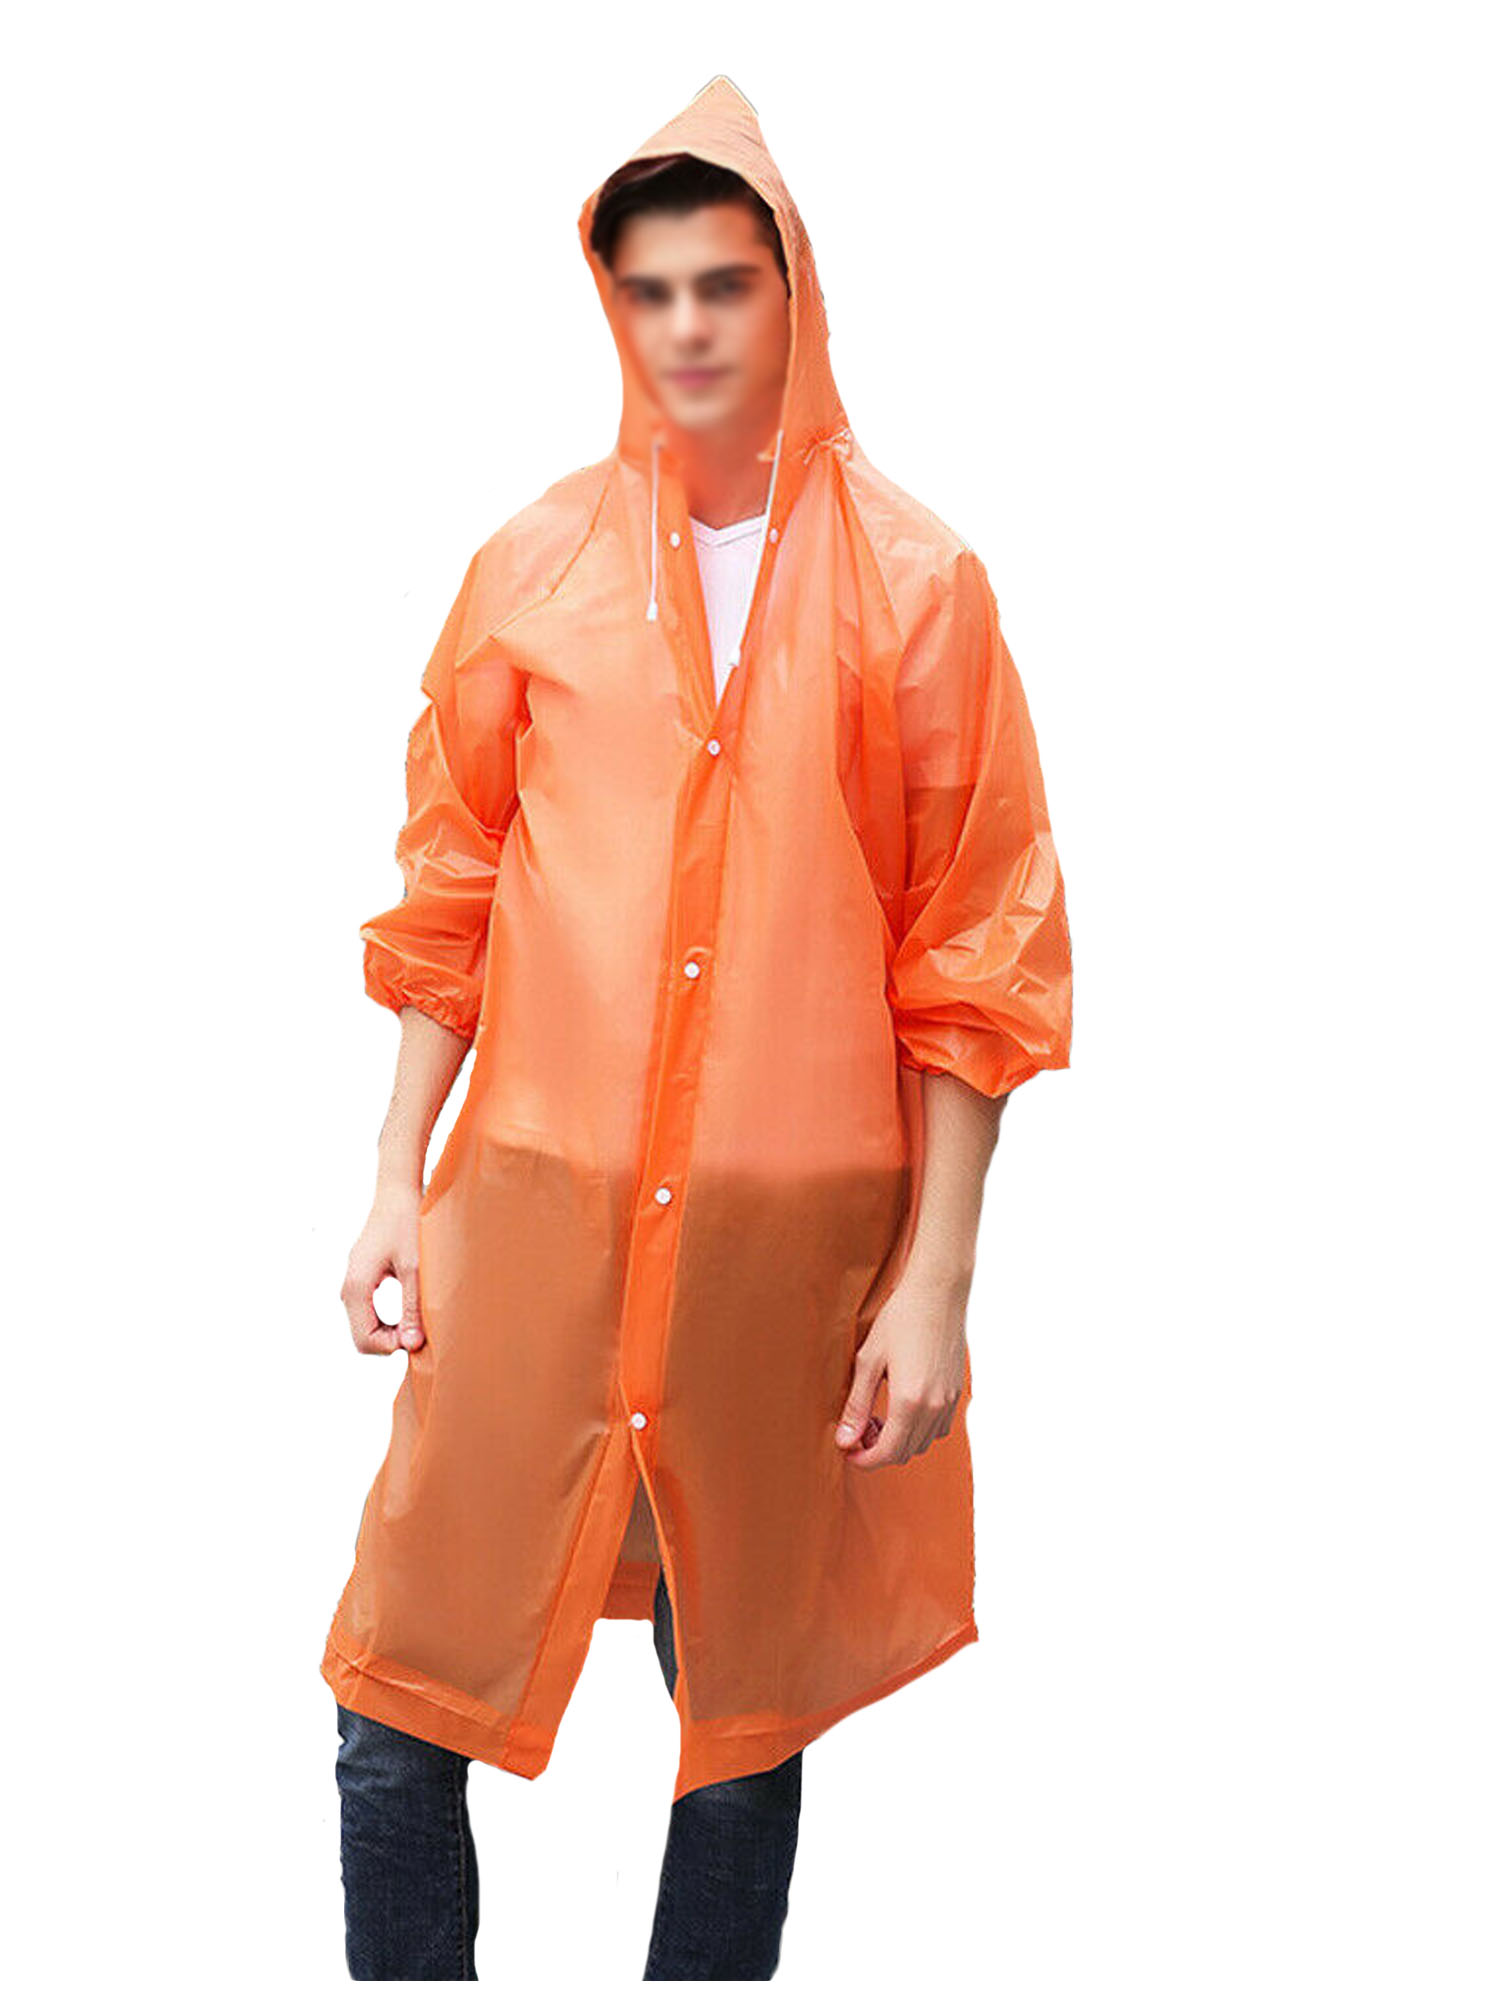 Nituyy Waterproof Jacket Clear EVA Raincoat Rain Coat Hooded Poncho Rainwear Unisex - image 2 of 2